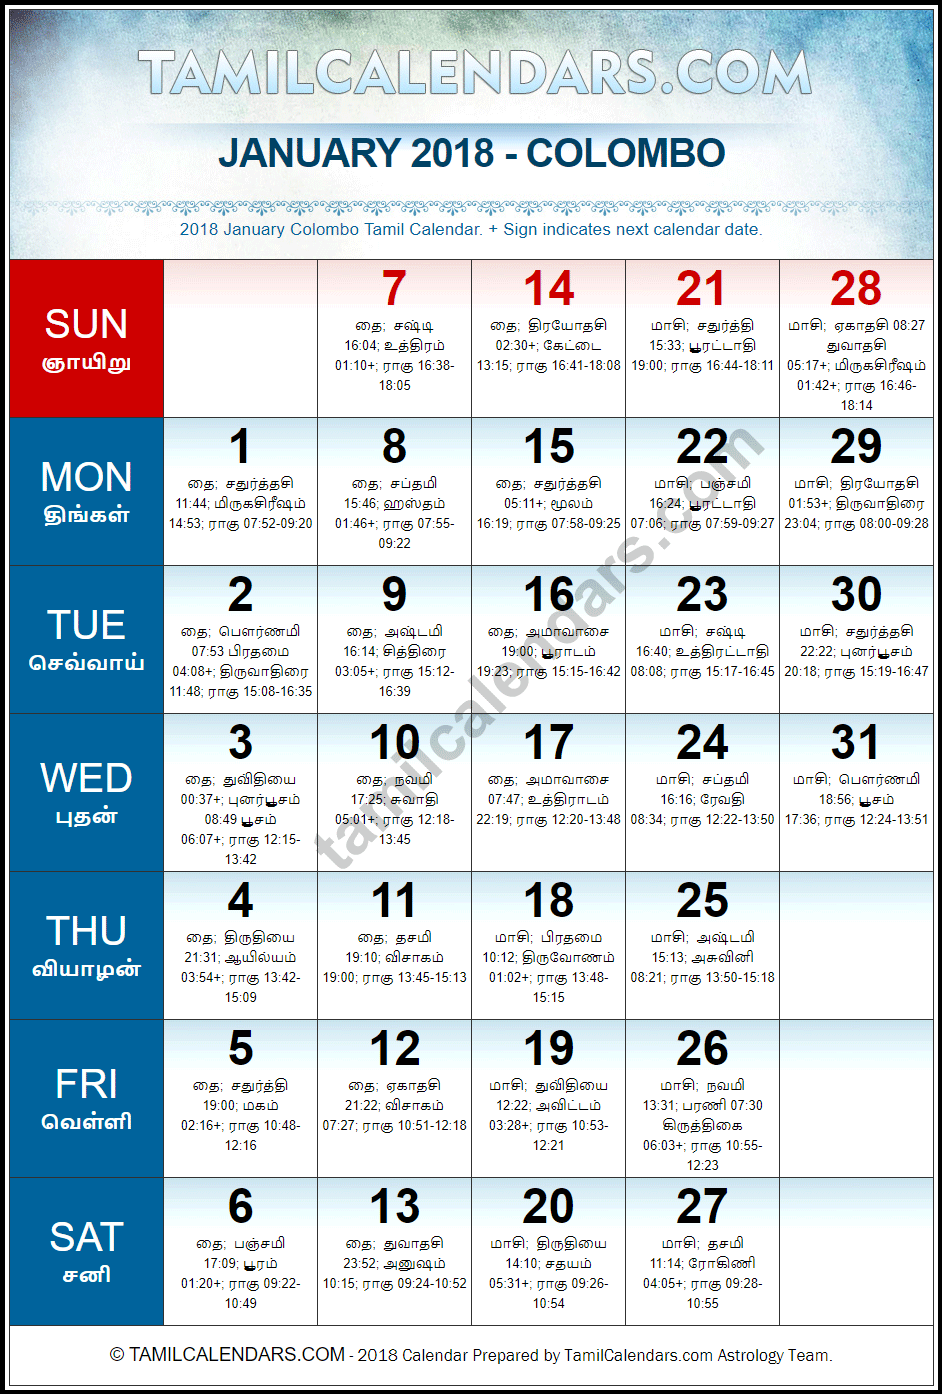 January 2018 Tamil Calendar for Sri Lanka (Colombo)